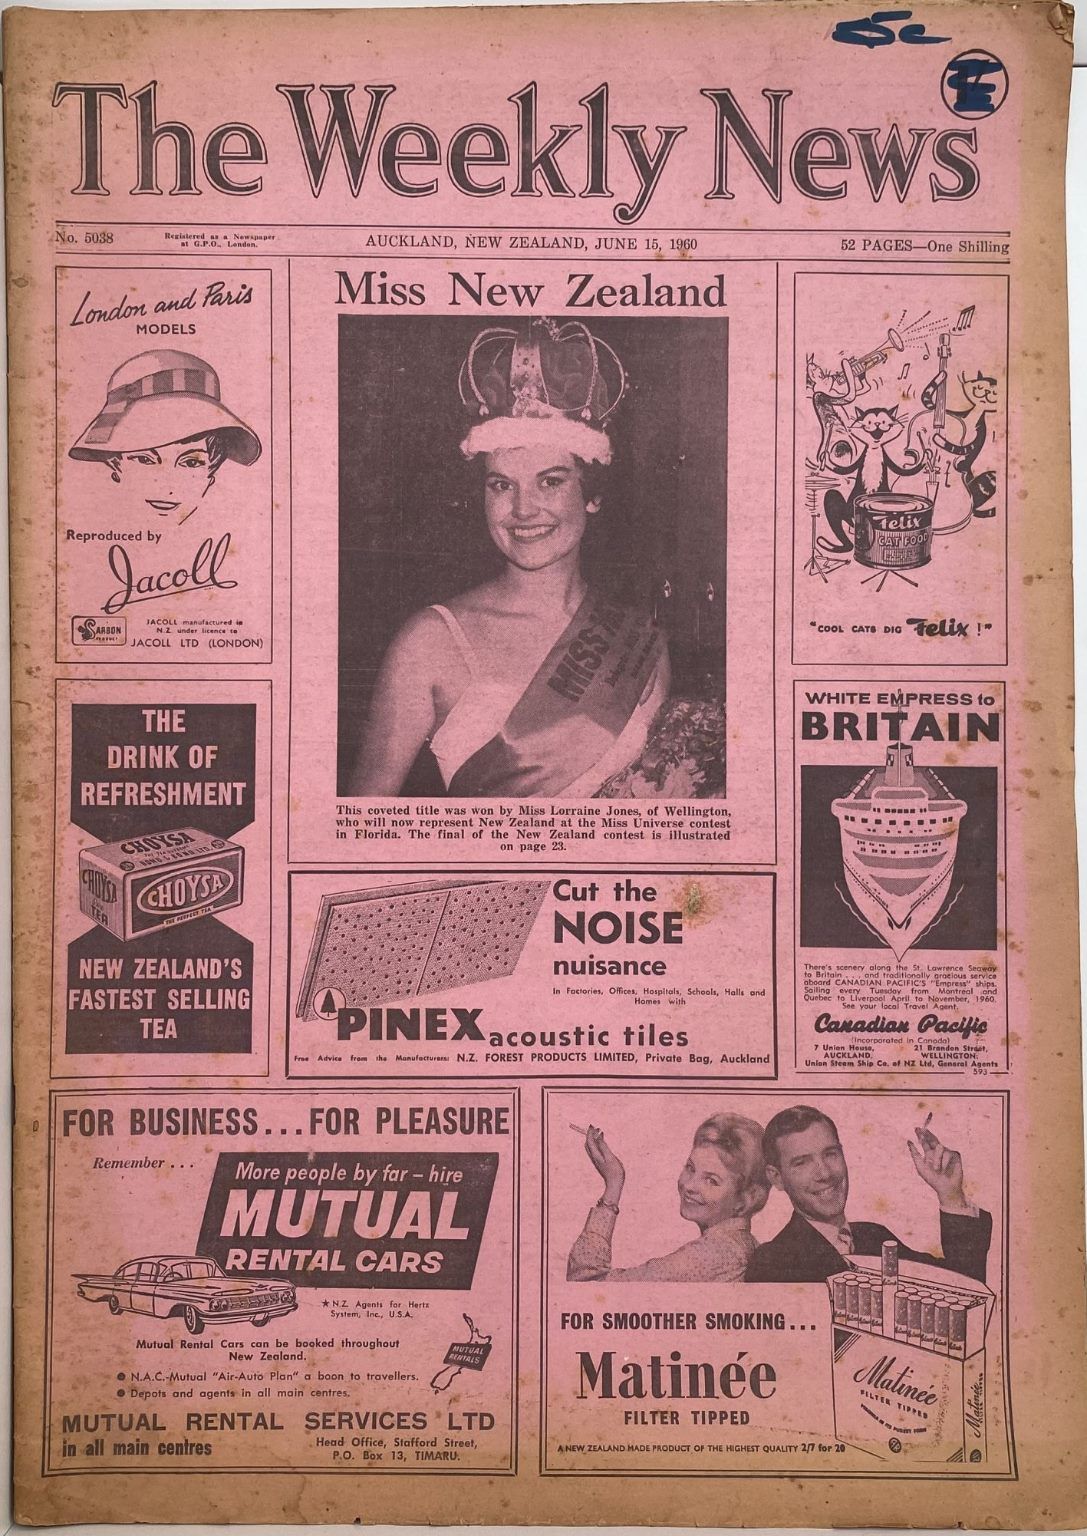 OLD NEWSPAPER: The Weekly News, 15 June 1960